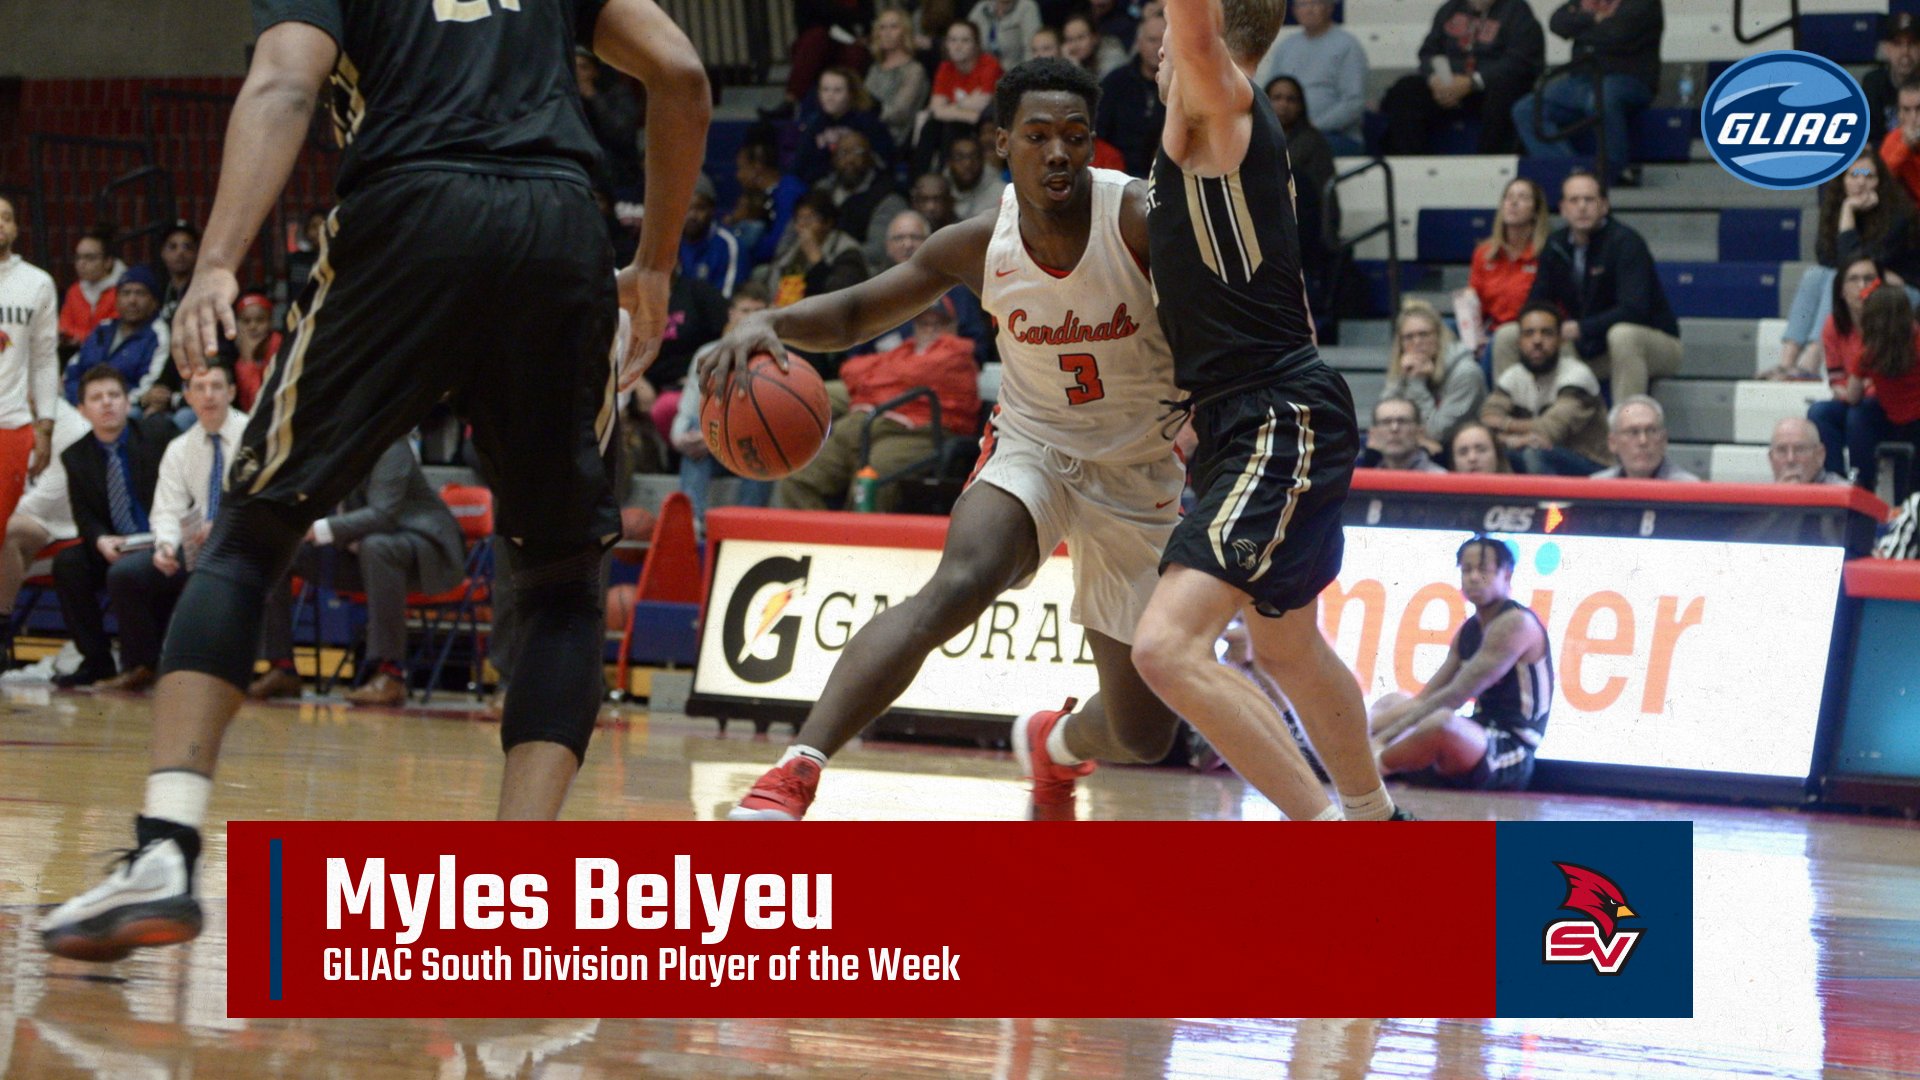 Myles Belyeu earns third GLIAC South Player of the Week honor